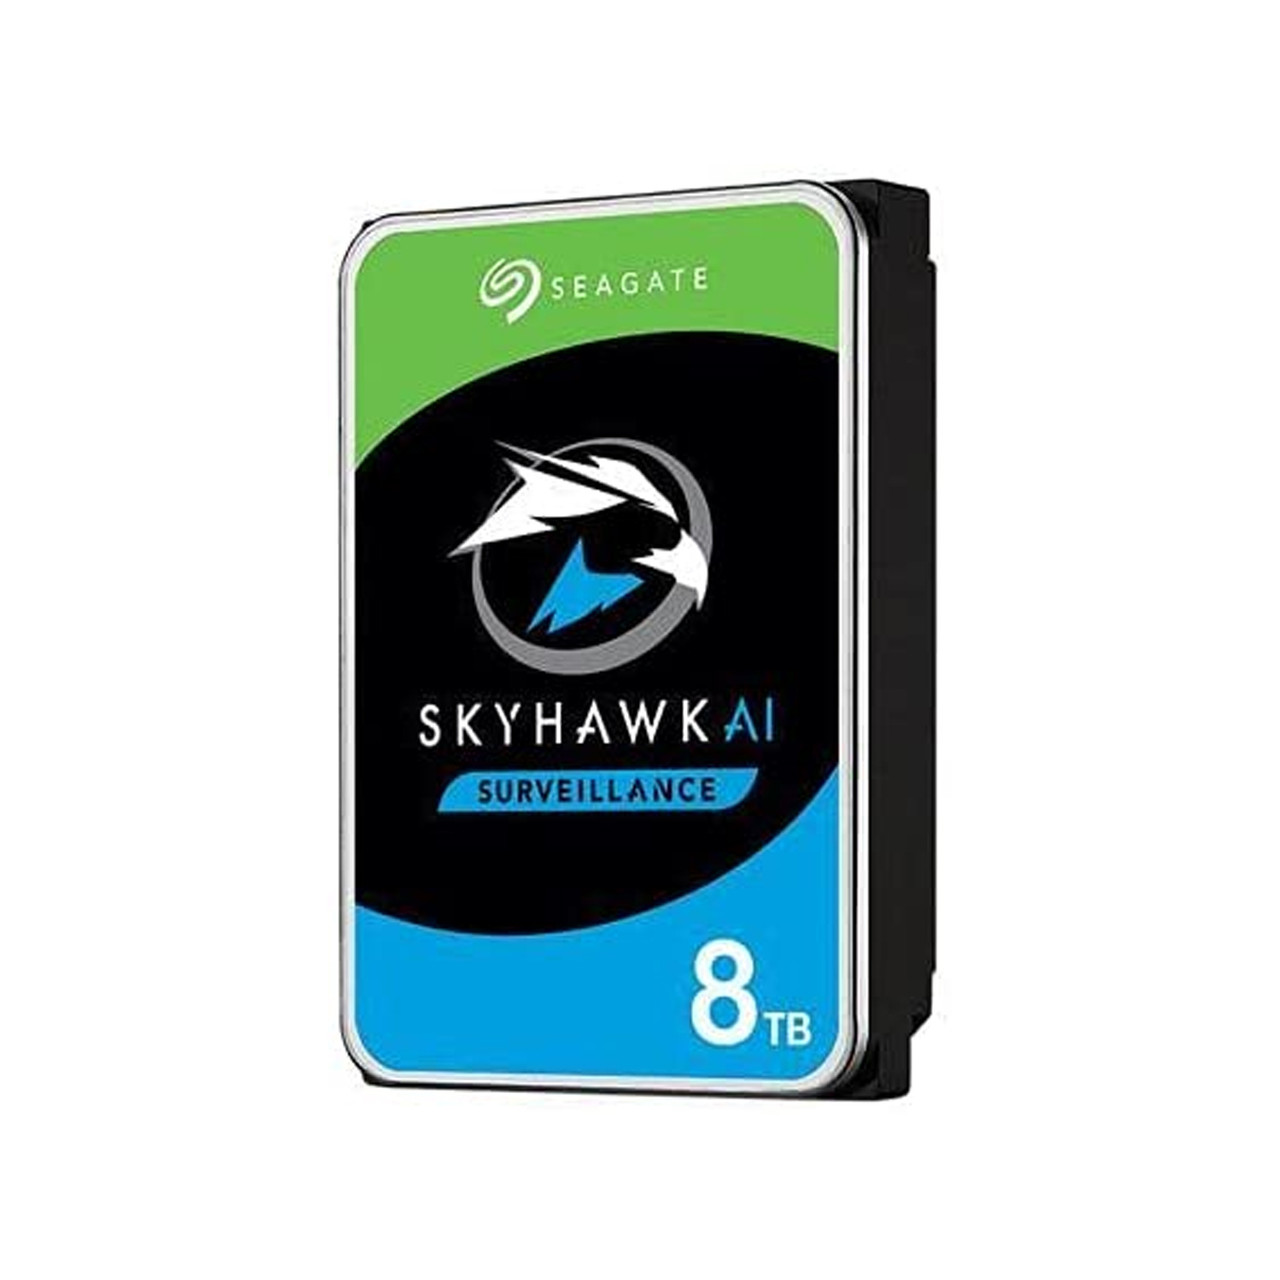 Seagate ST8000VE001 Skyhawk AI  8TB 7200 RPM 256MB Cache SATA 6.0Gb/s 3.5" Internal Hard Drive